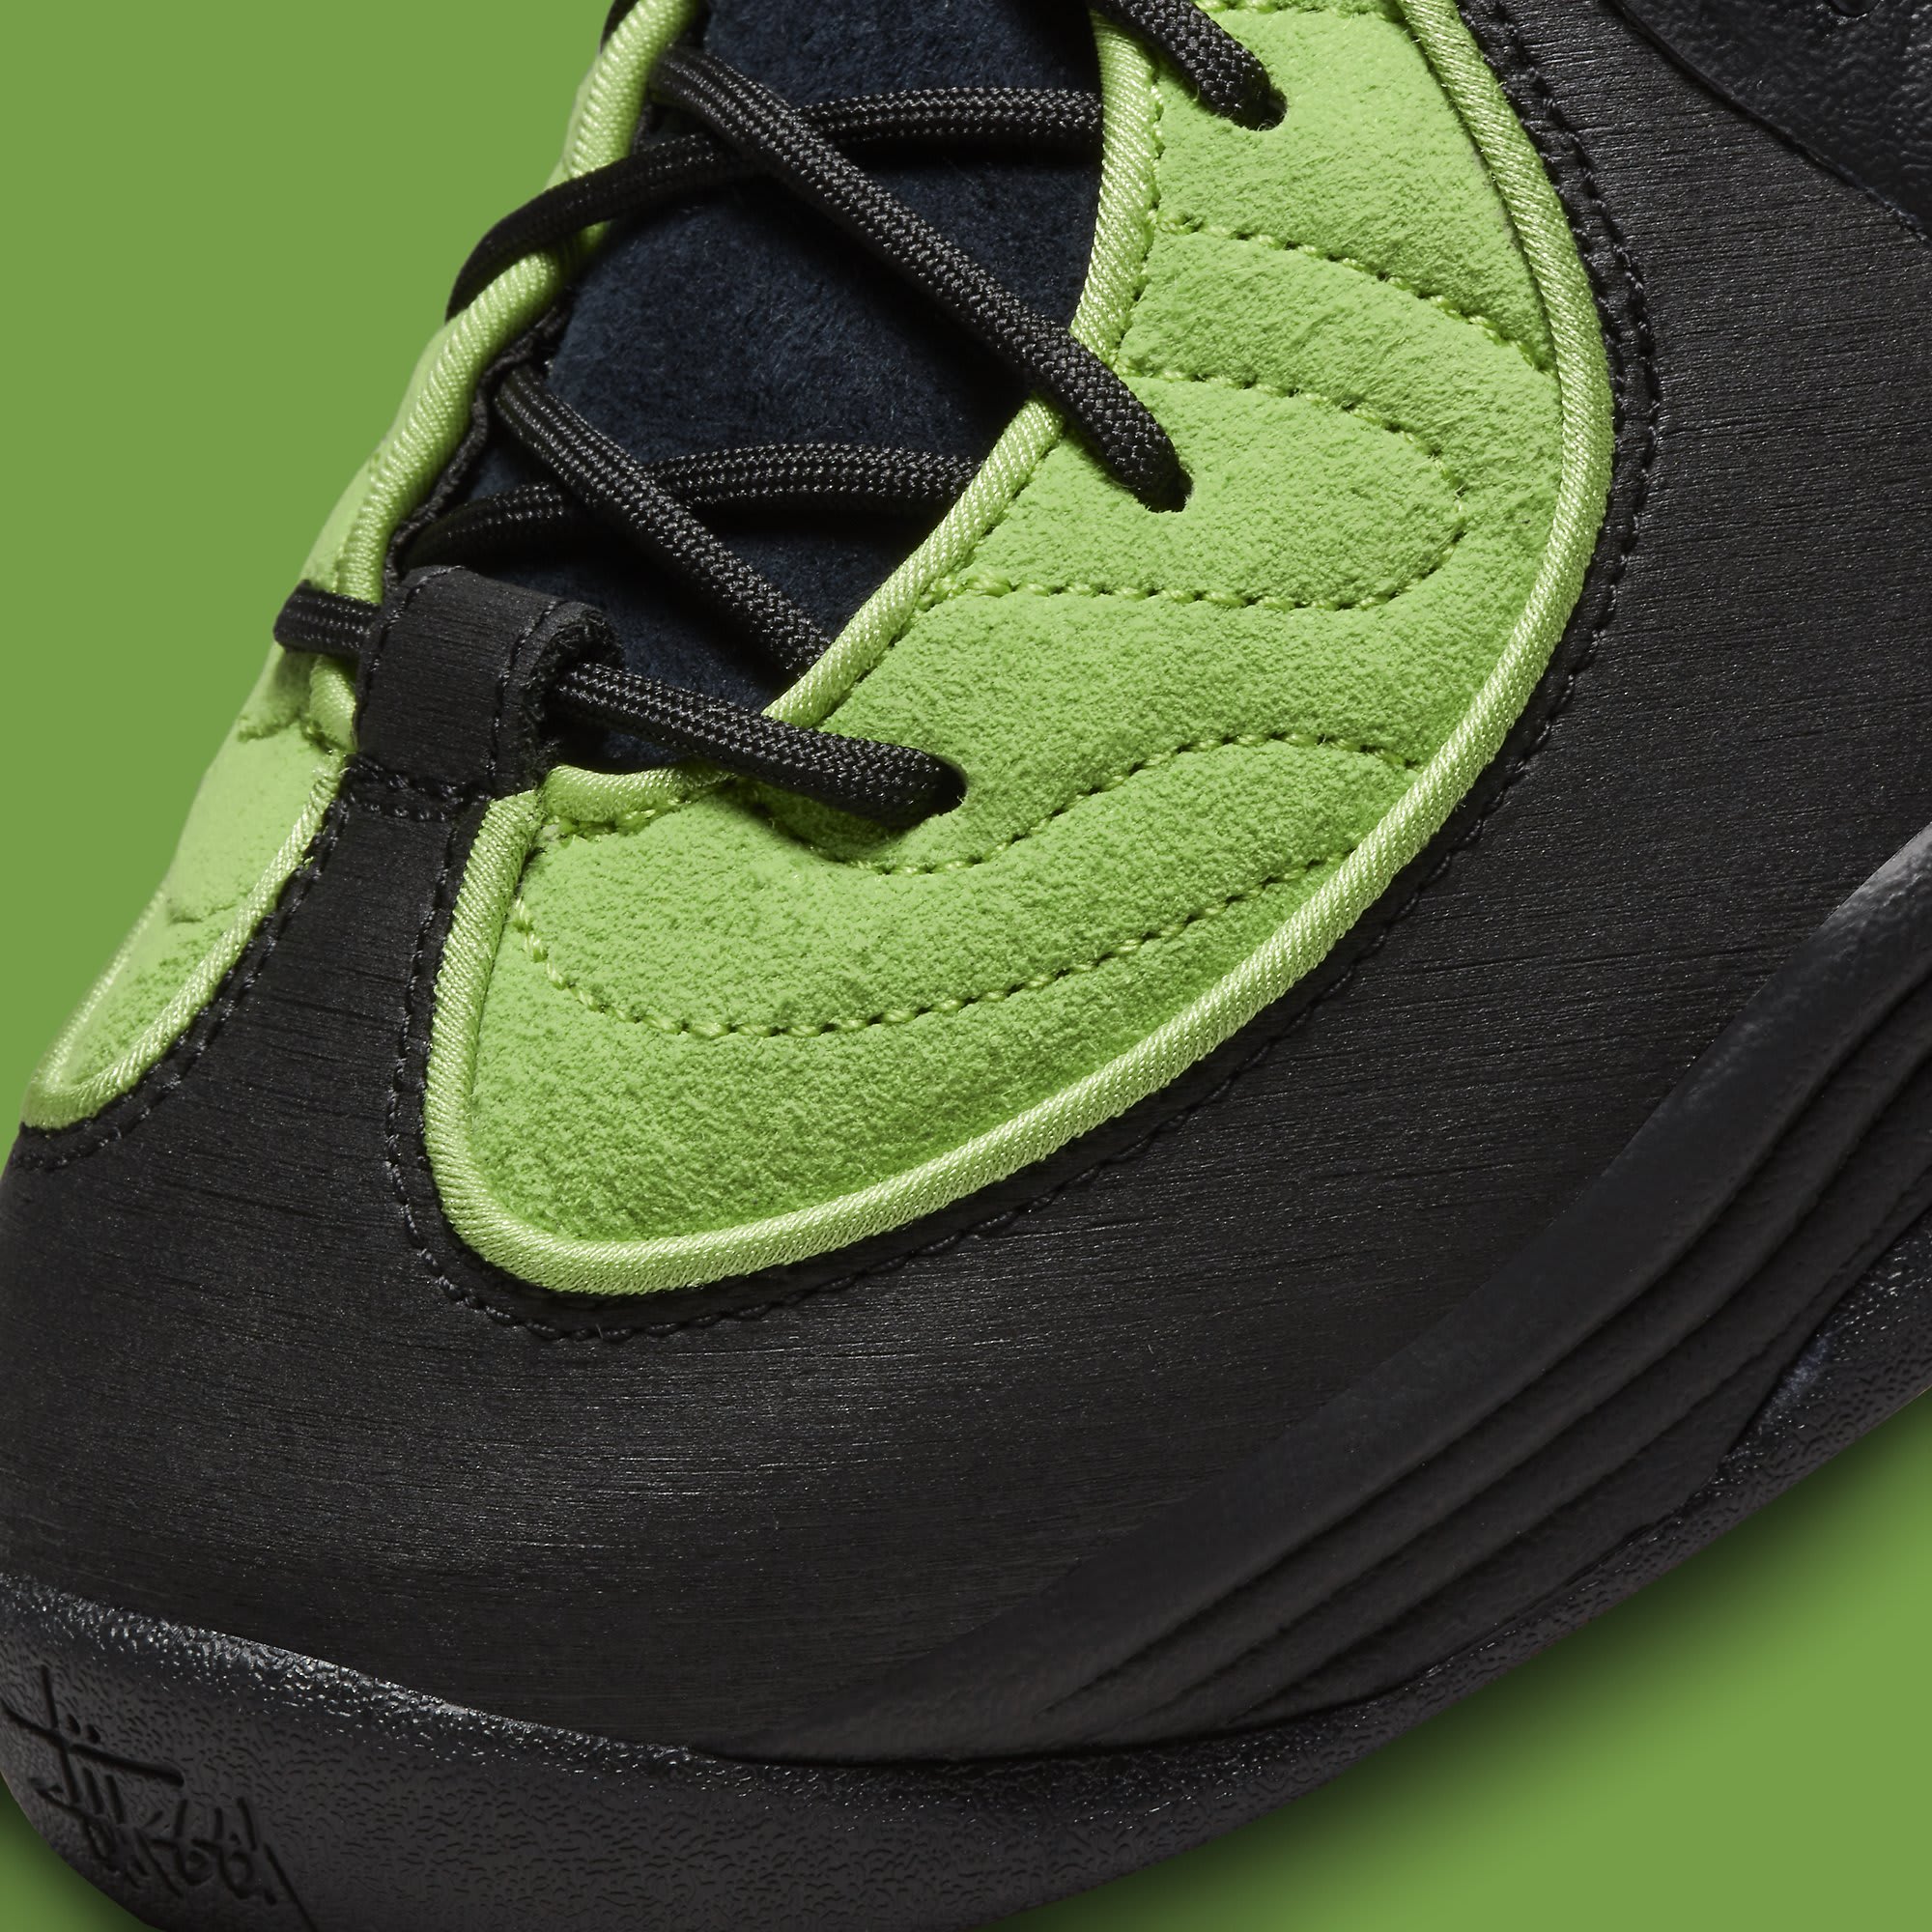 Stussy x Nike Air Penny 2 Black/Green DX6933 300 Toe